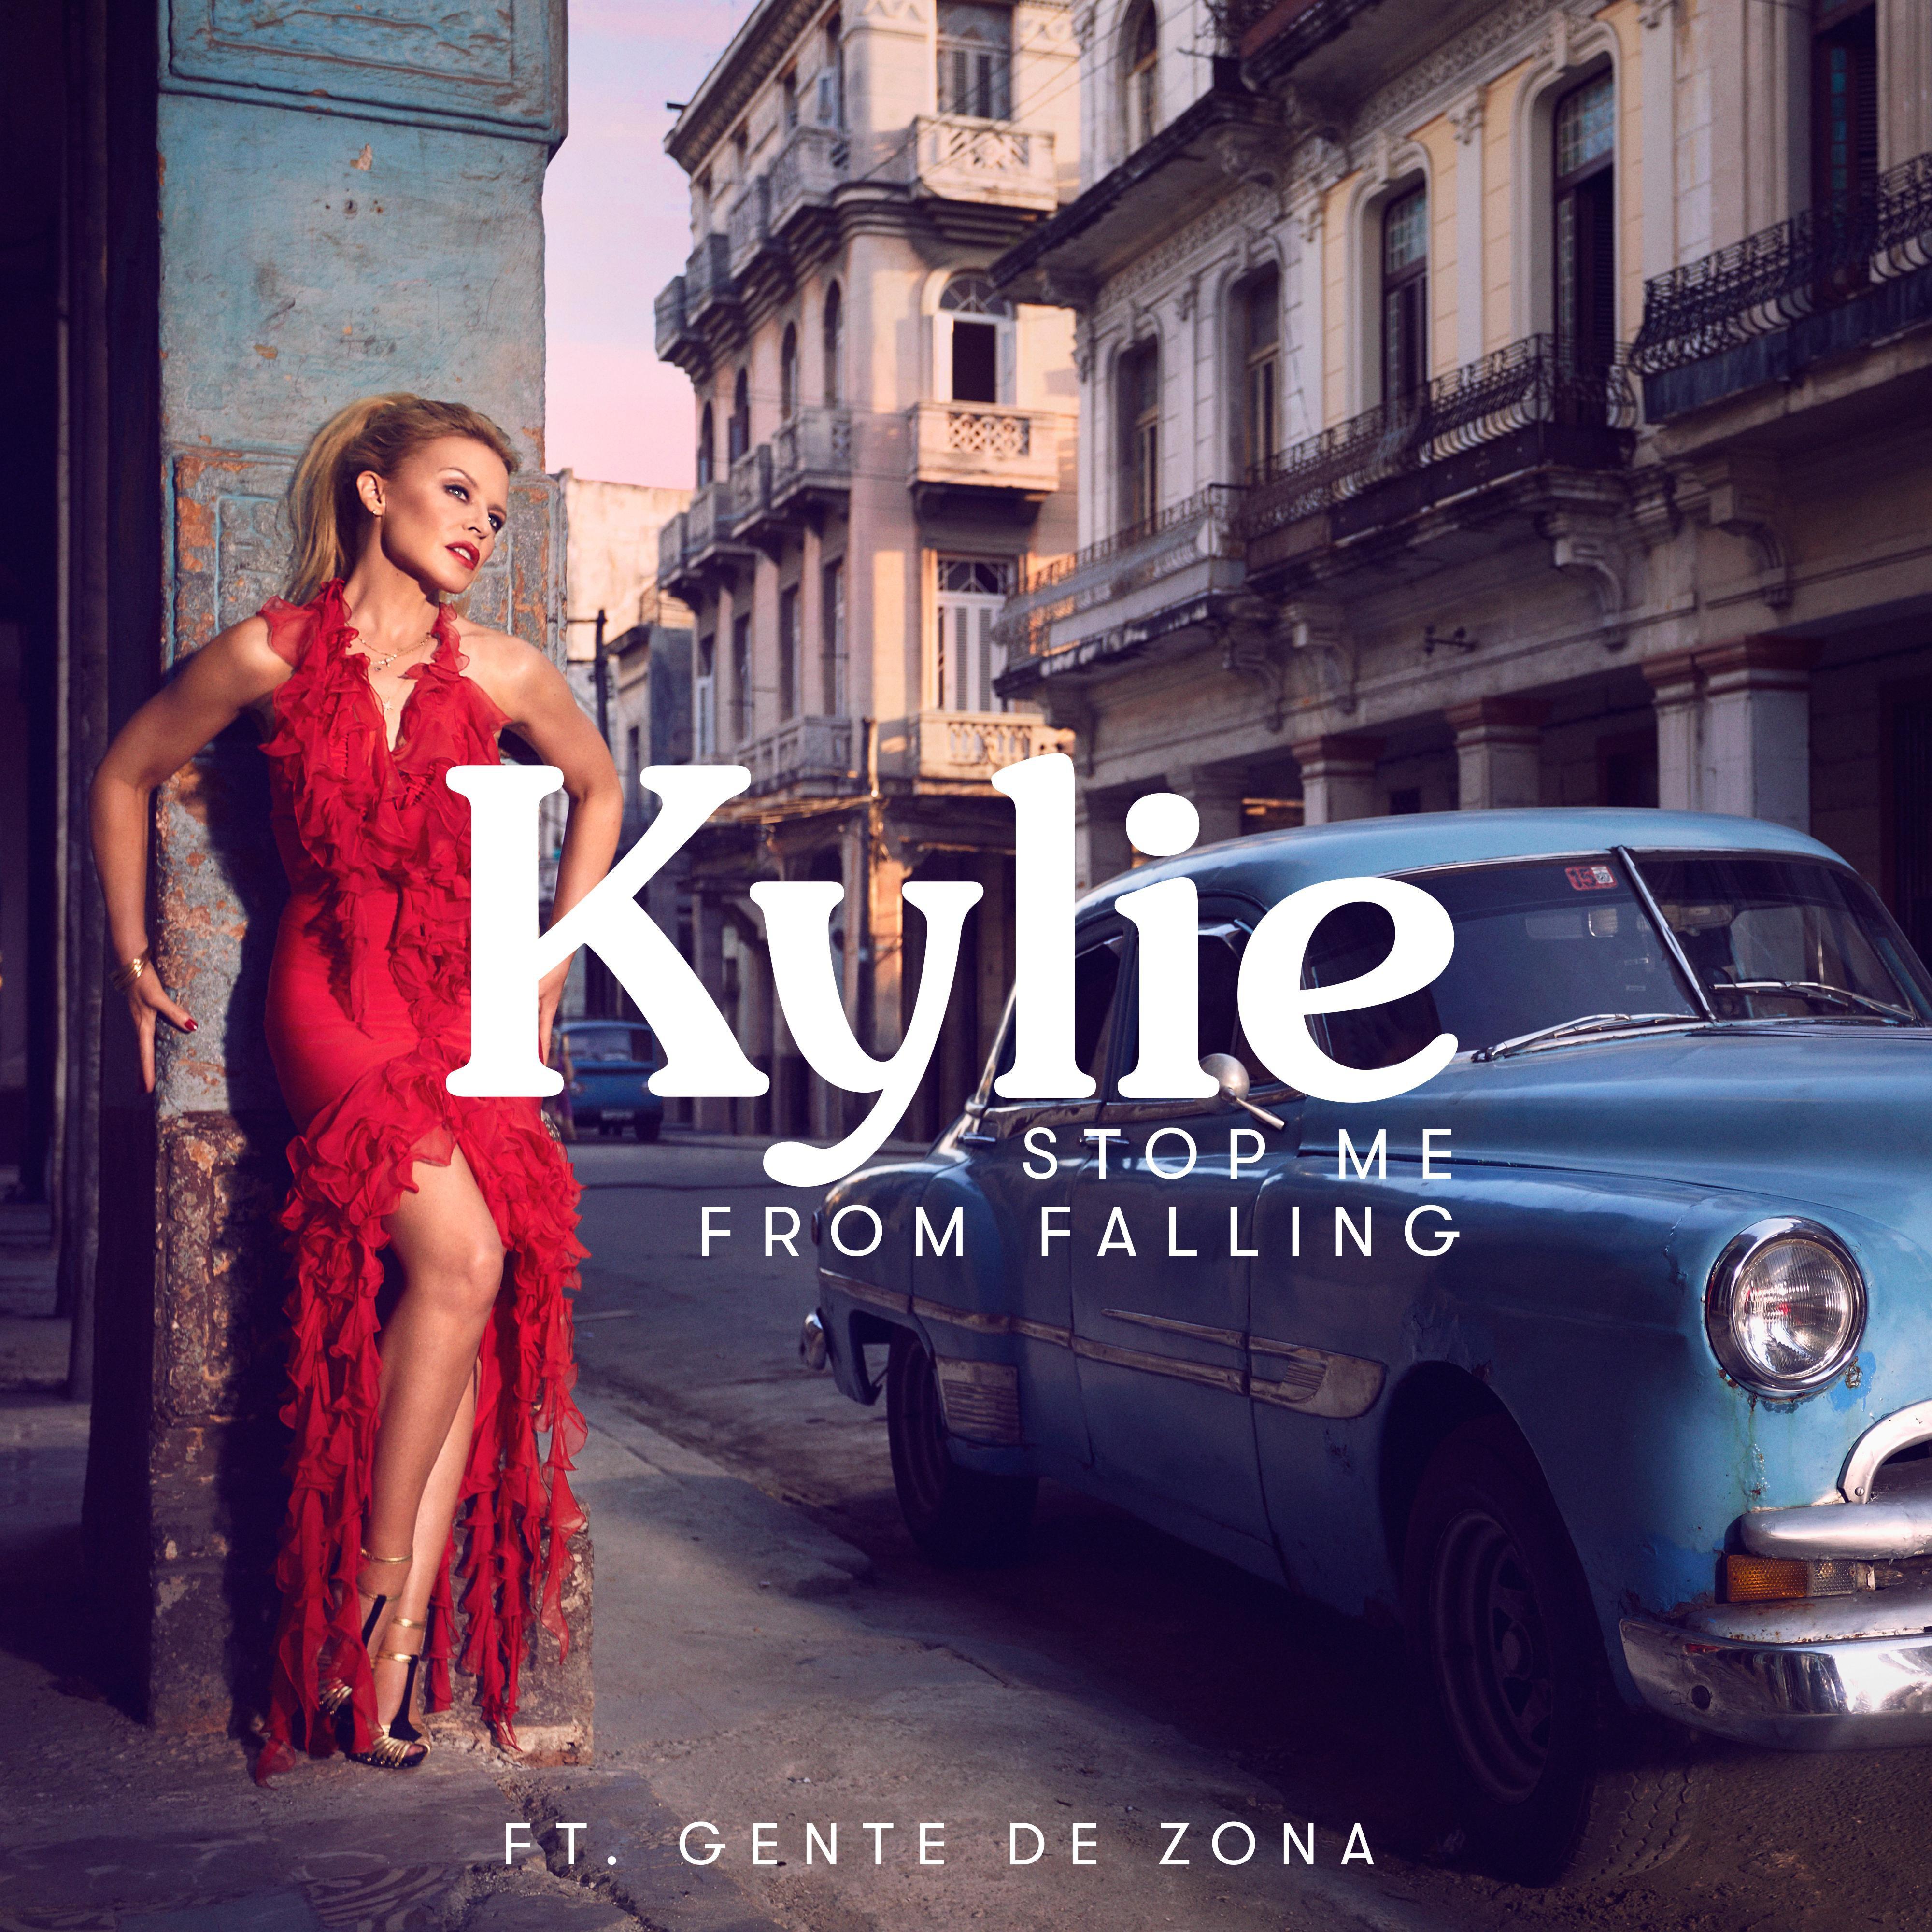 Kylie Minogue. 播 放 收 藏(13)下 载. 歌 手. 发 行 时 间.2018-04-20. 